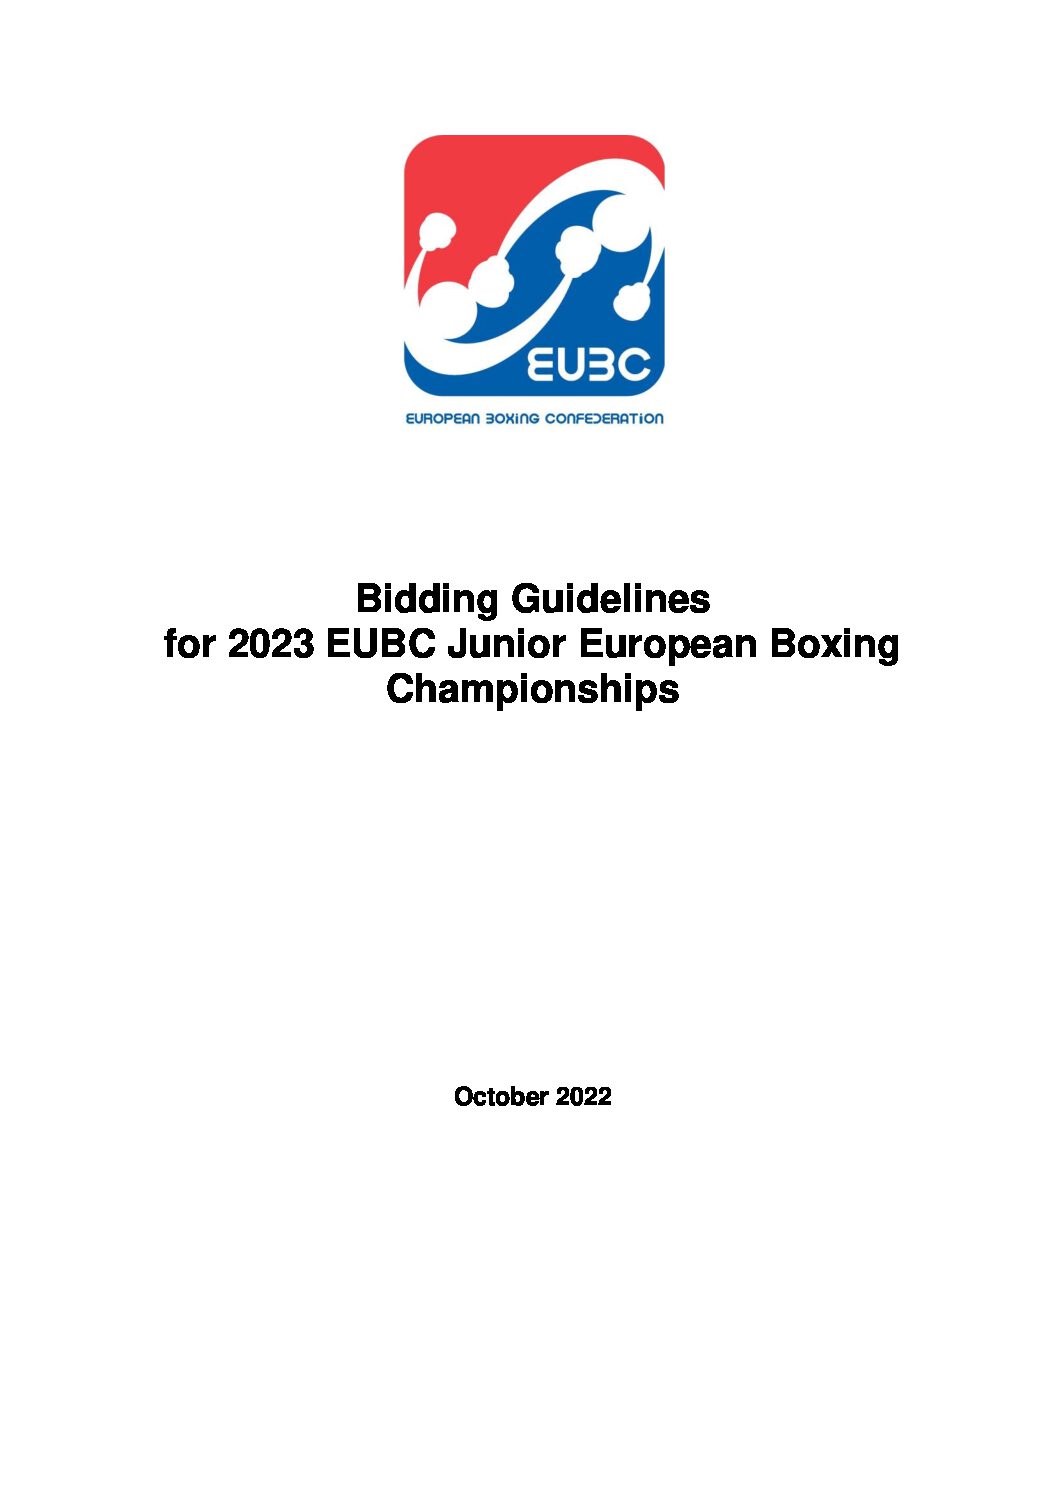 The Global Boxing Forum – Abu Dhabi 2022